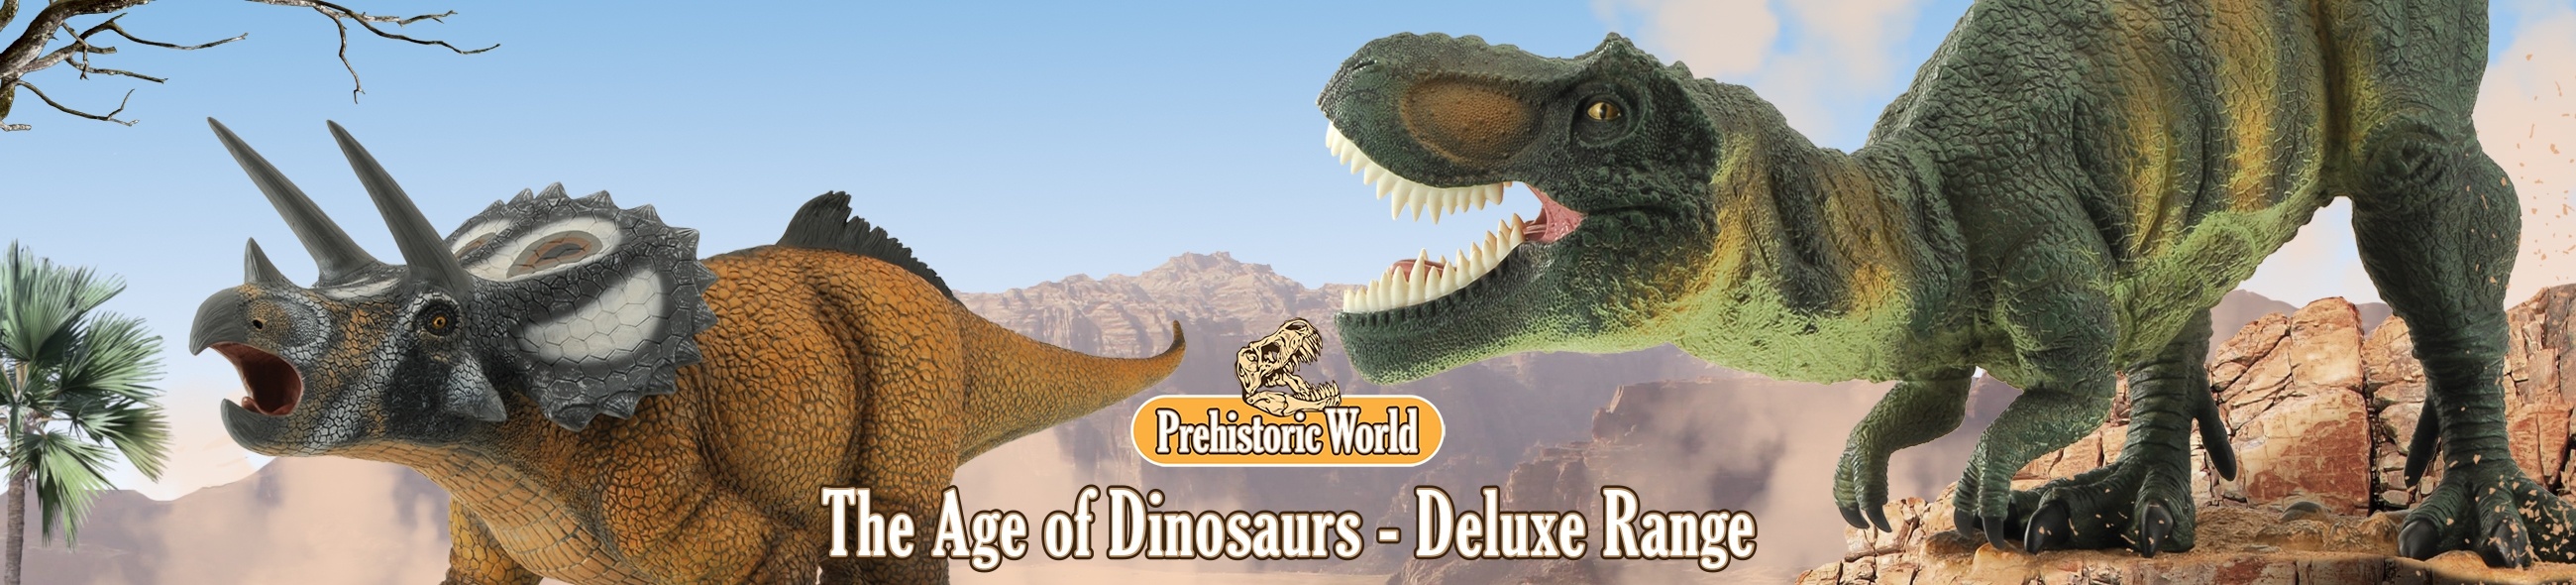 Age of Dinosaurs - Deluxe Range